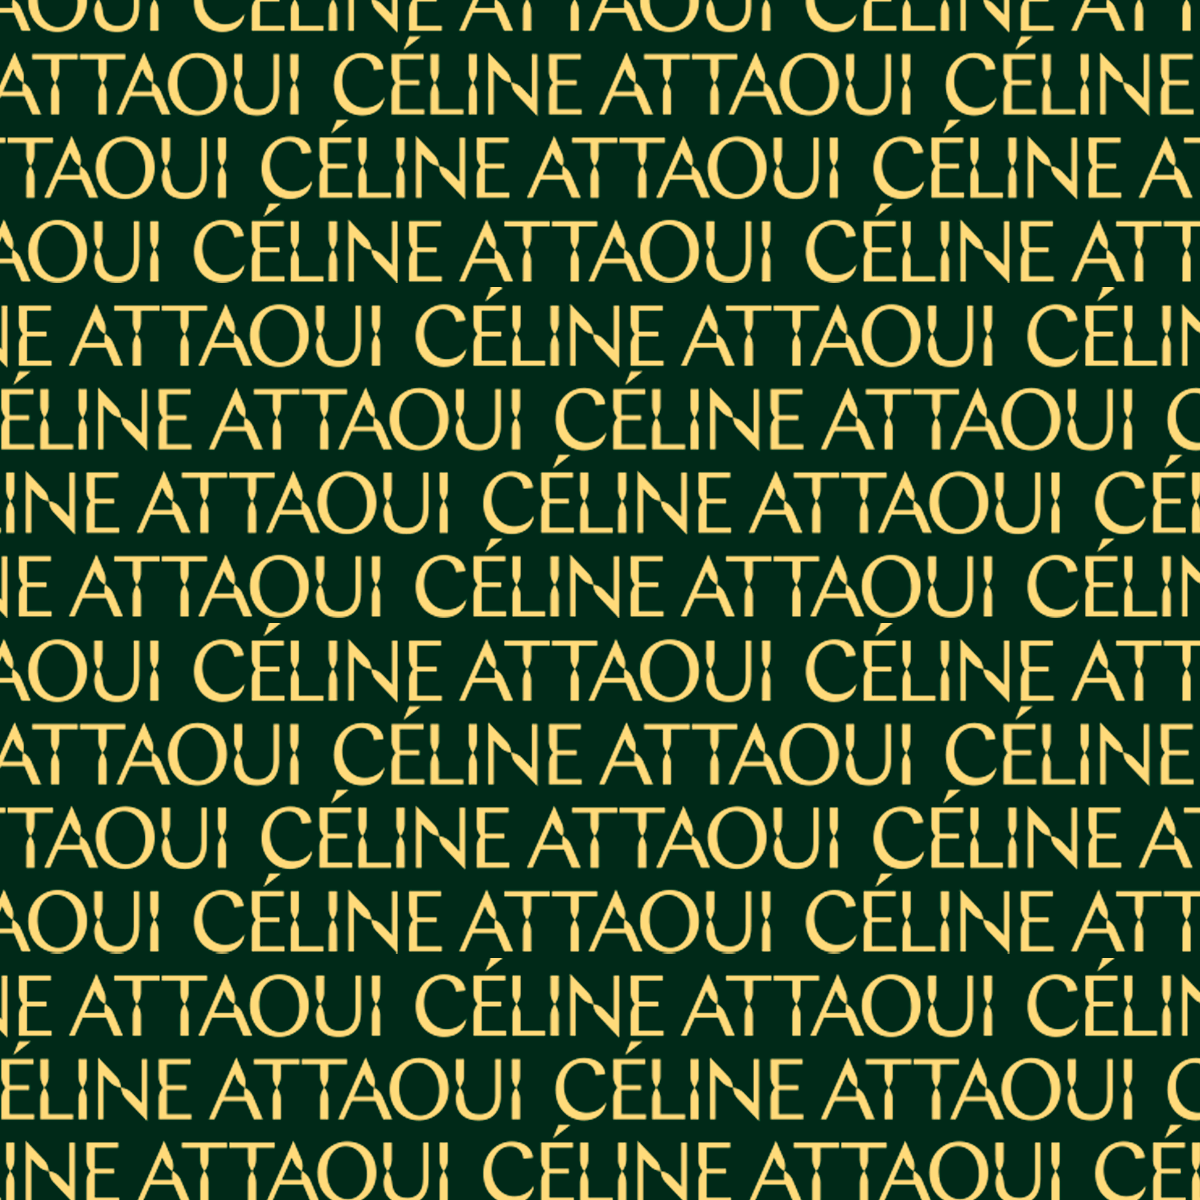 celine-attaoui-avocate-famille-societe-antoine-peltier-2